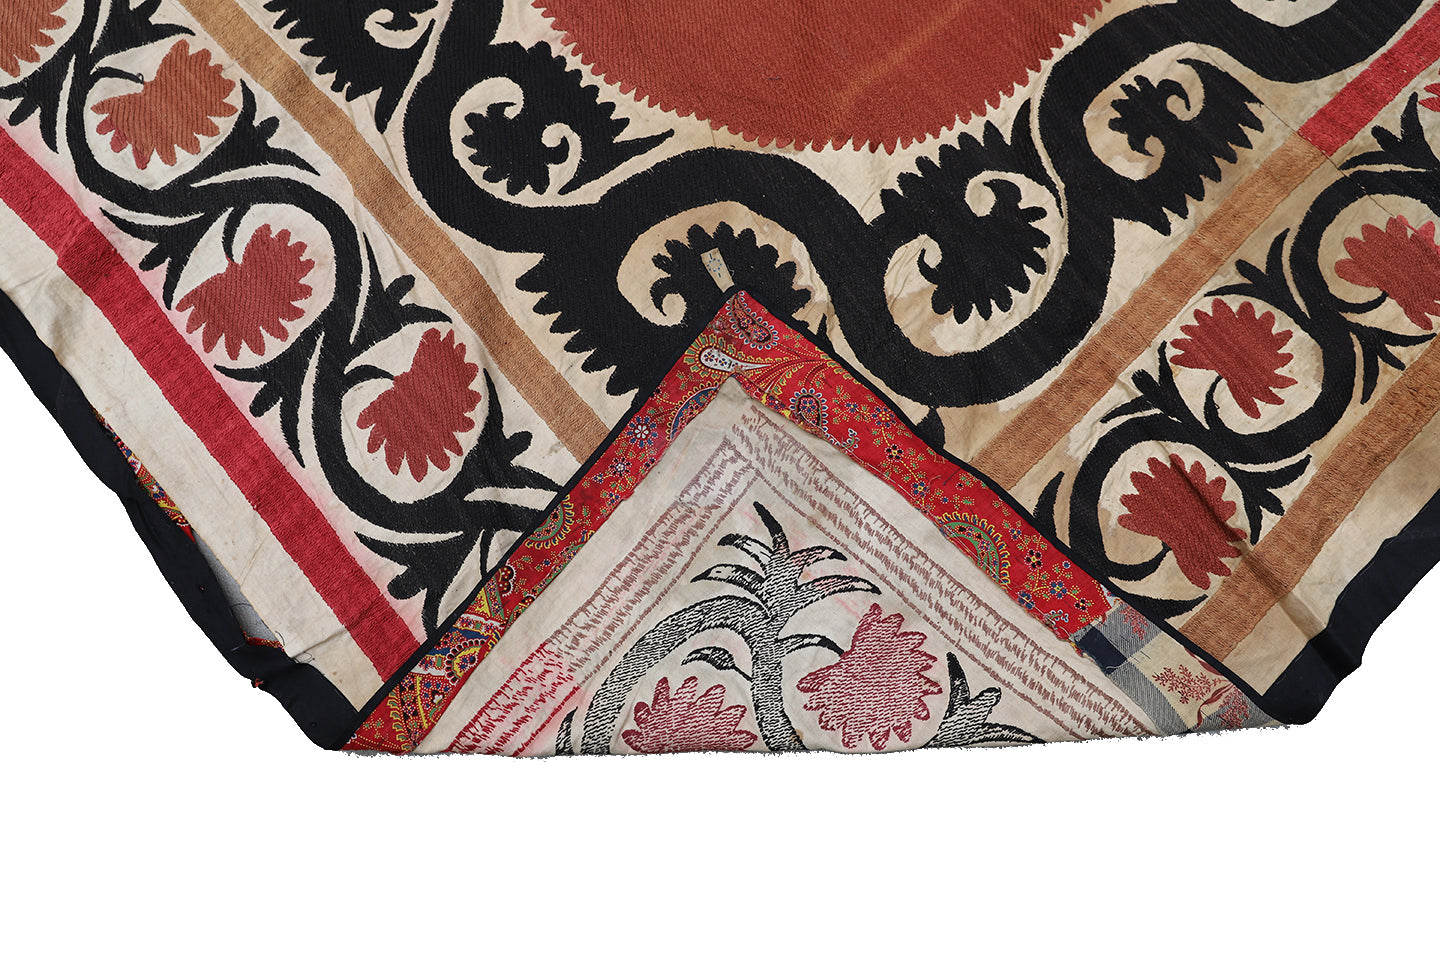 9'x11' Large Vintage Uzbek Suzani Textile Tapestry